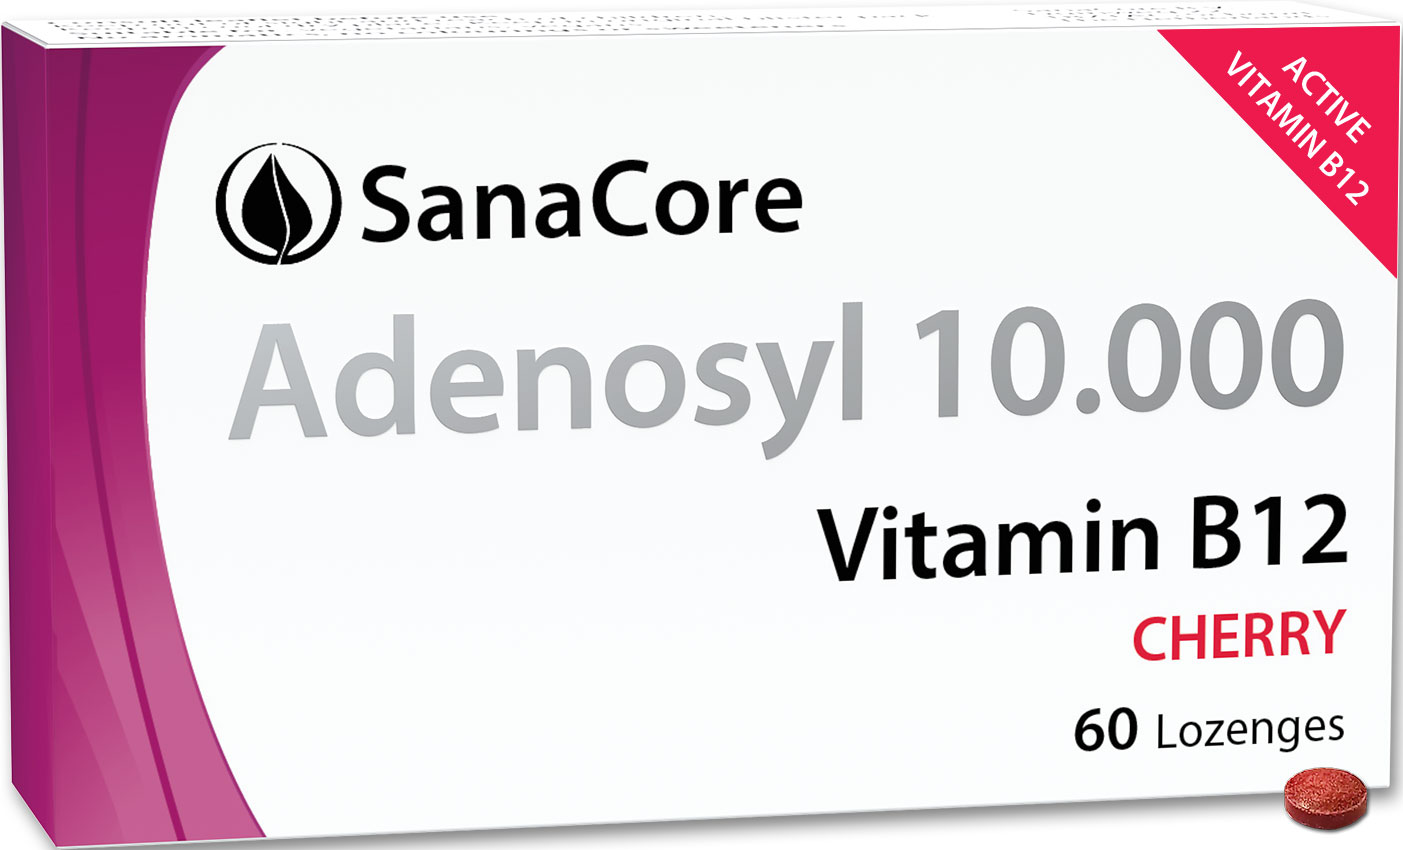 Adenosyl 10.000